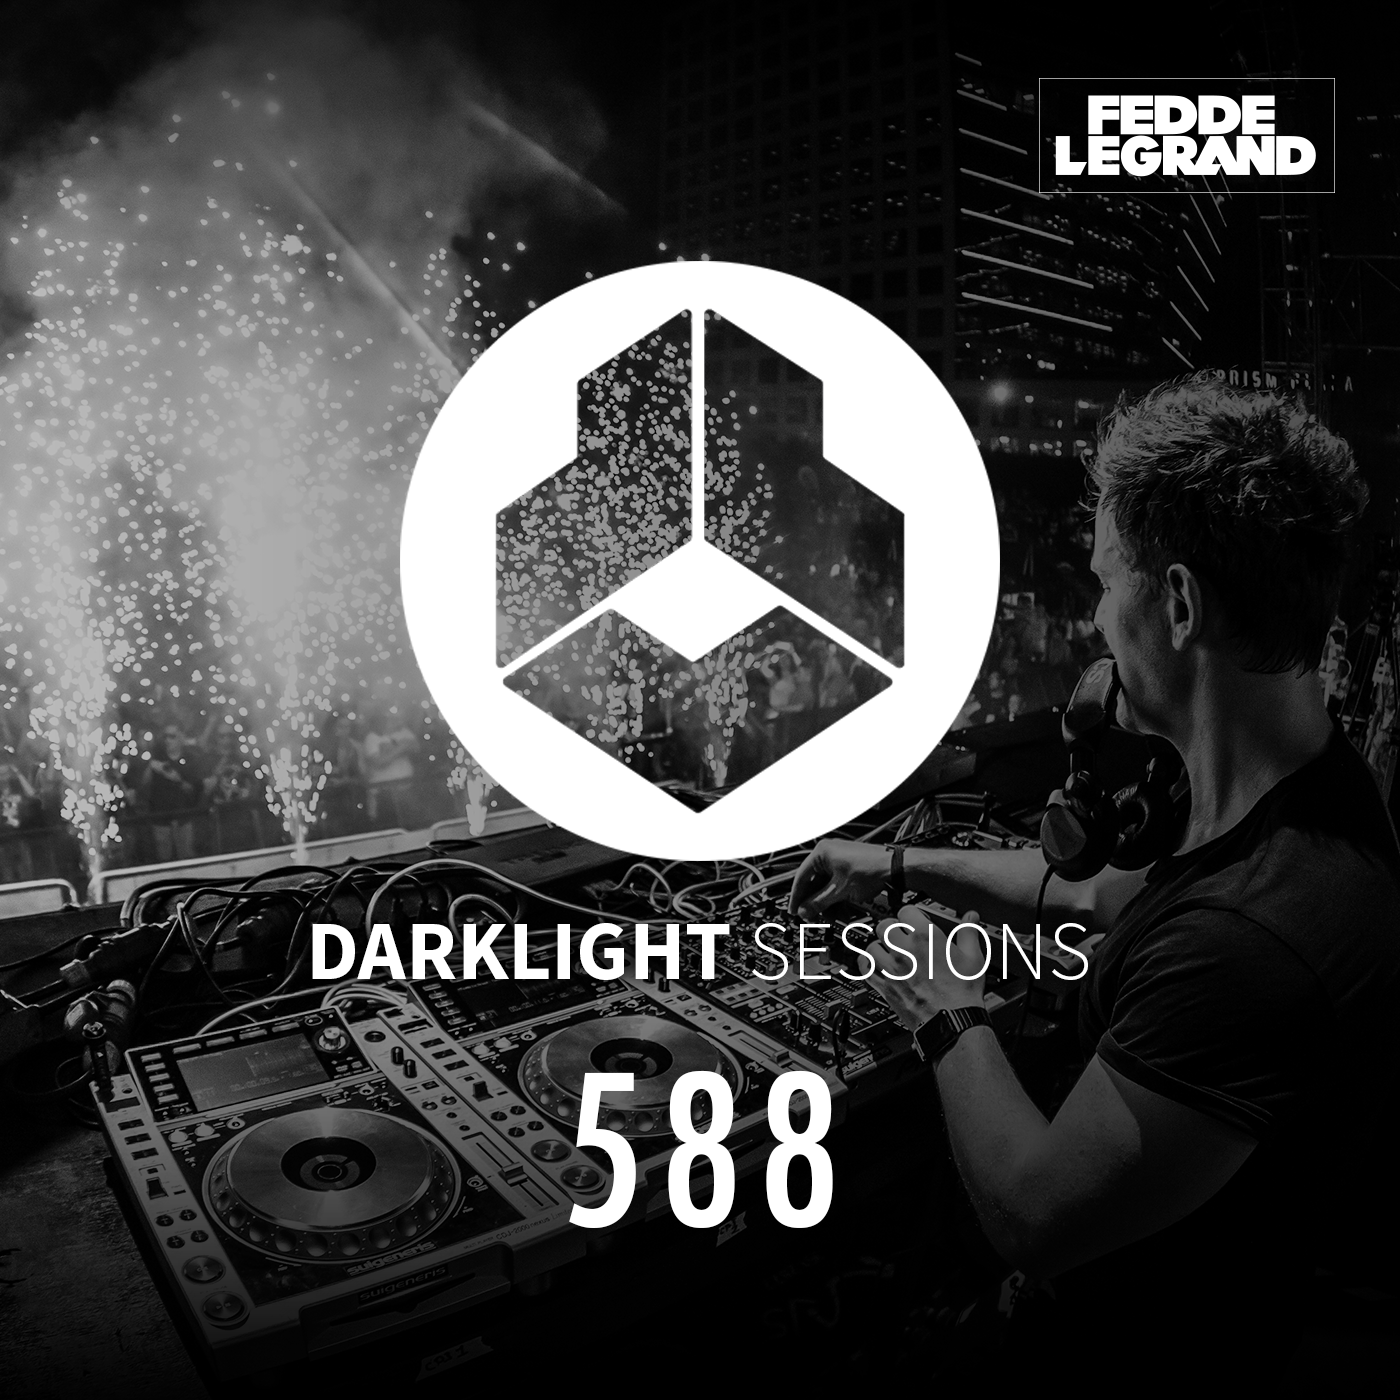 Darklight Sessions 588